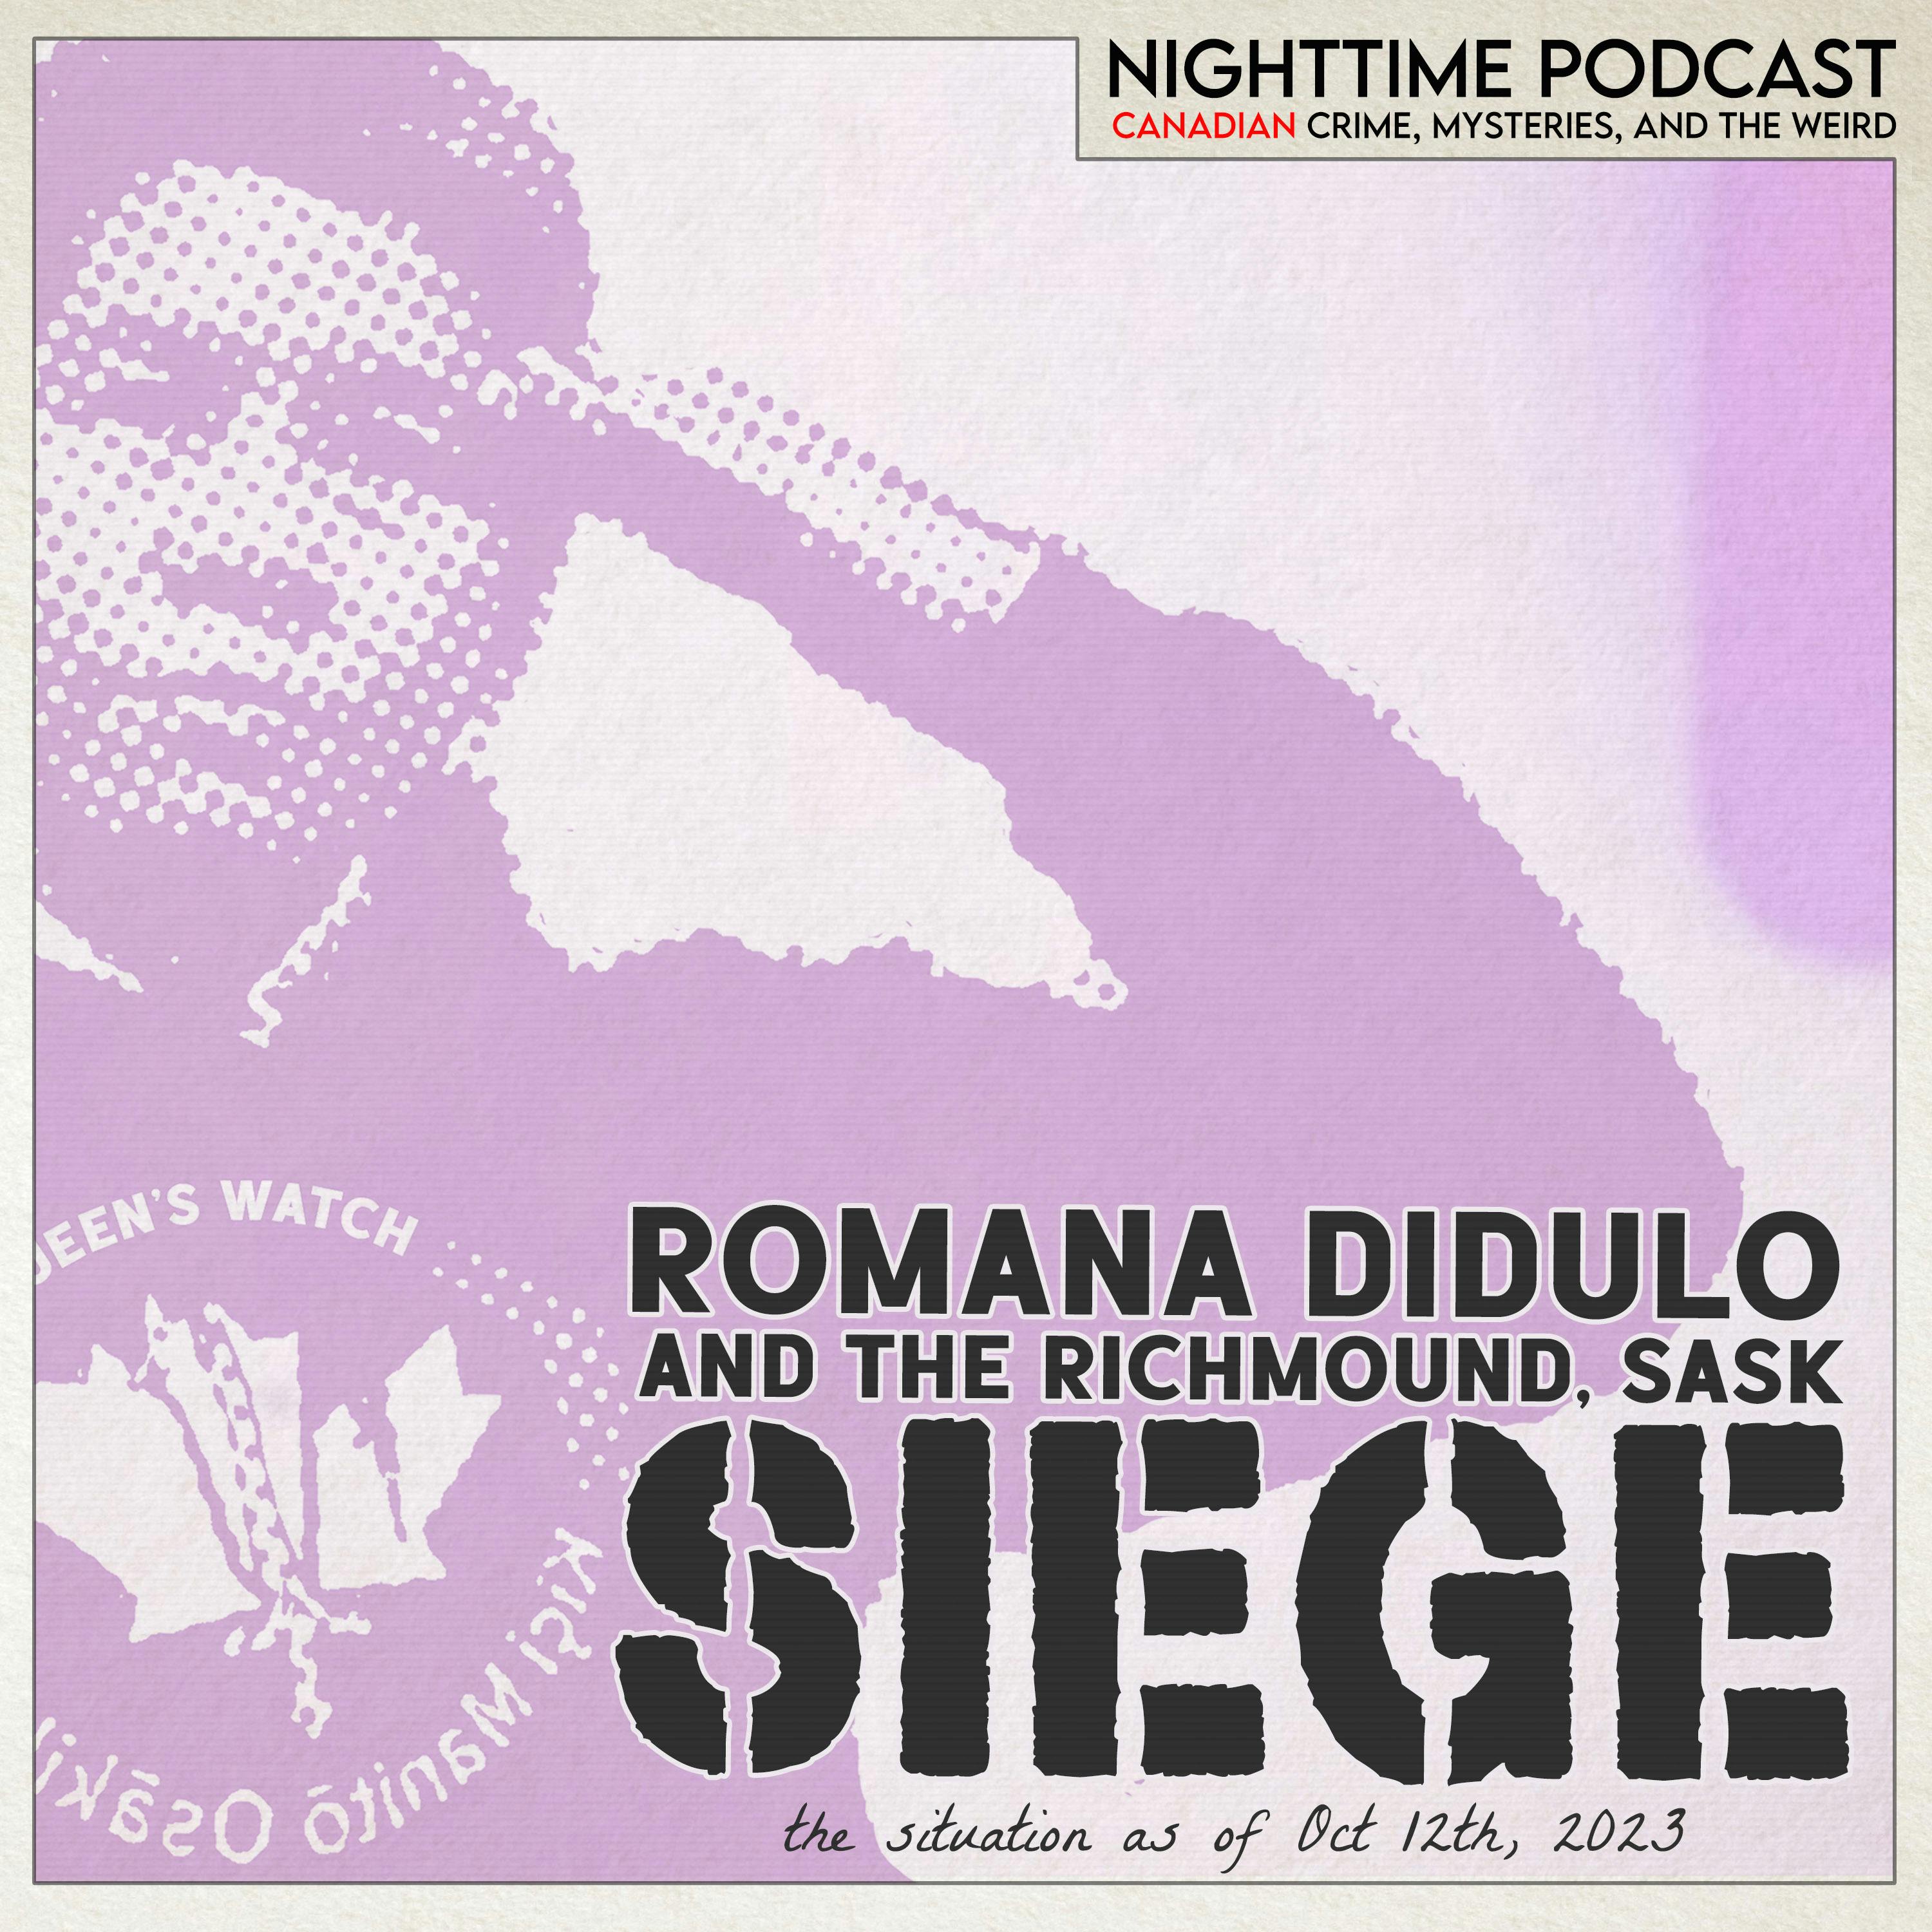 Romana Didulo and the Richmound, Sask SIEGE (as of Oct 12, 2023)